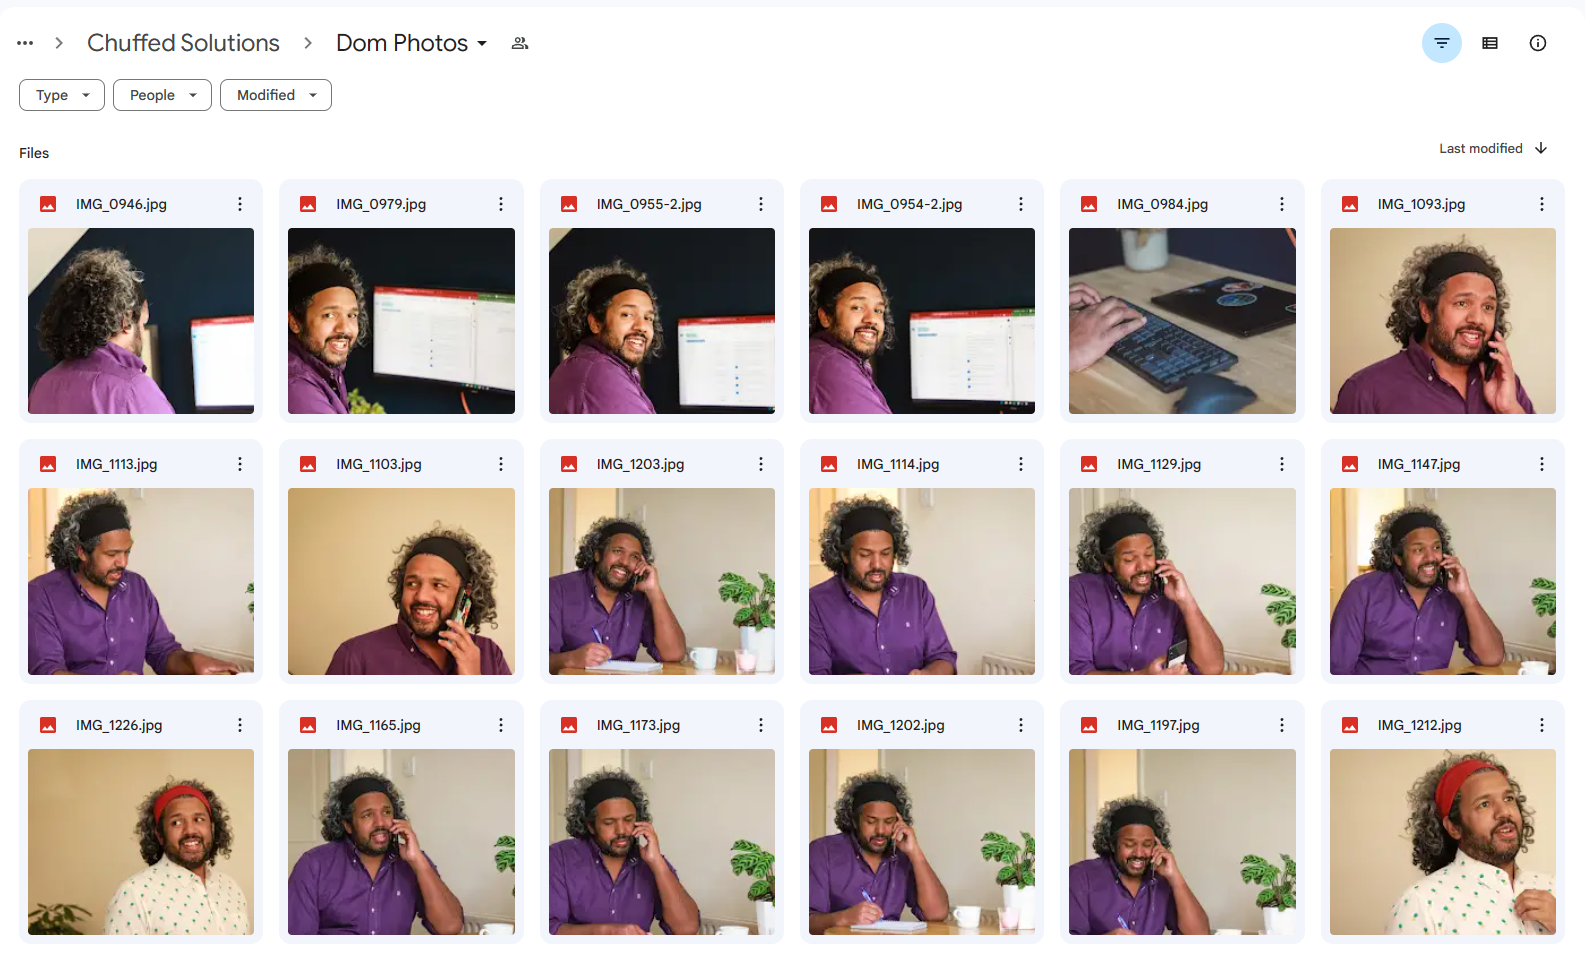 Google Drive folder full of headshot photos